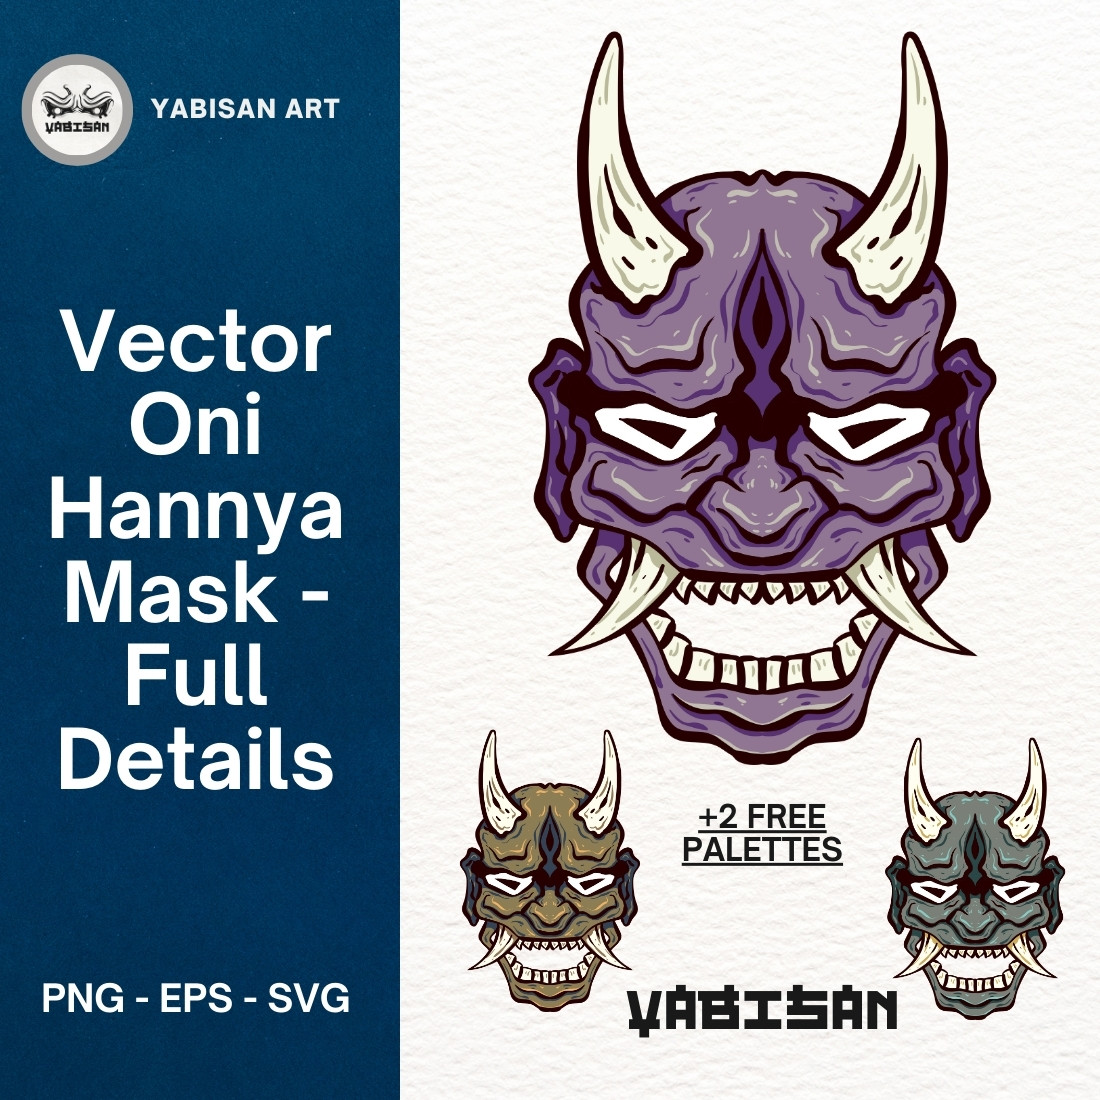 Oni Hannya Mask art 5 - Full Details preview image.